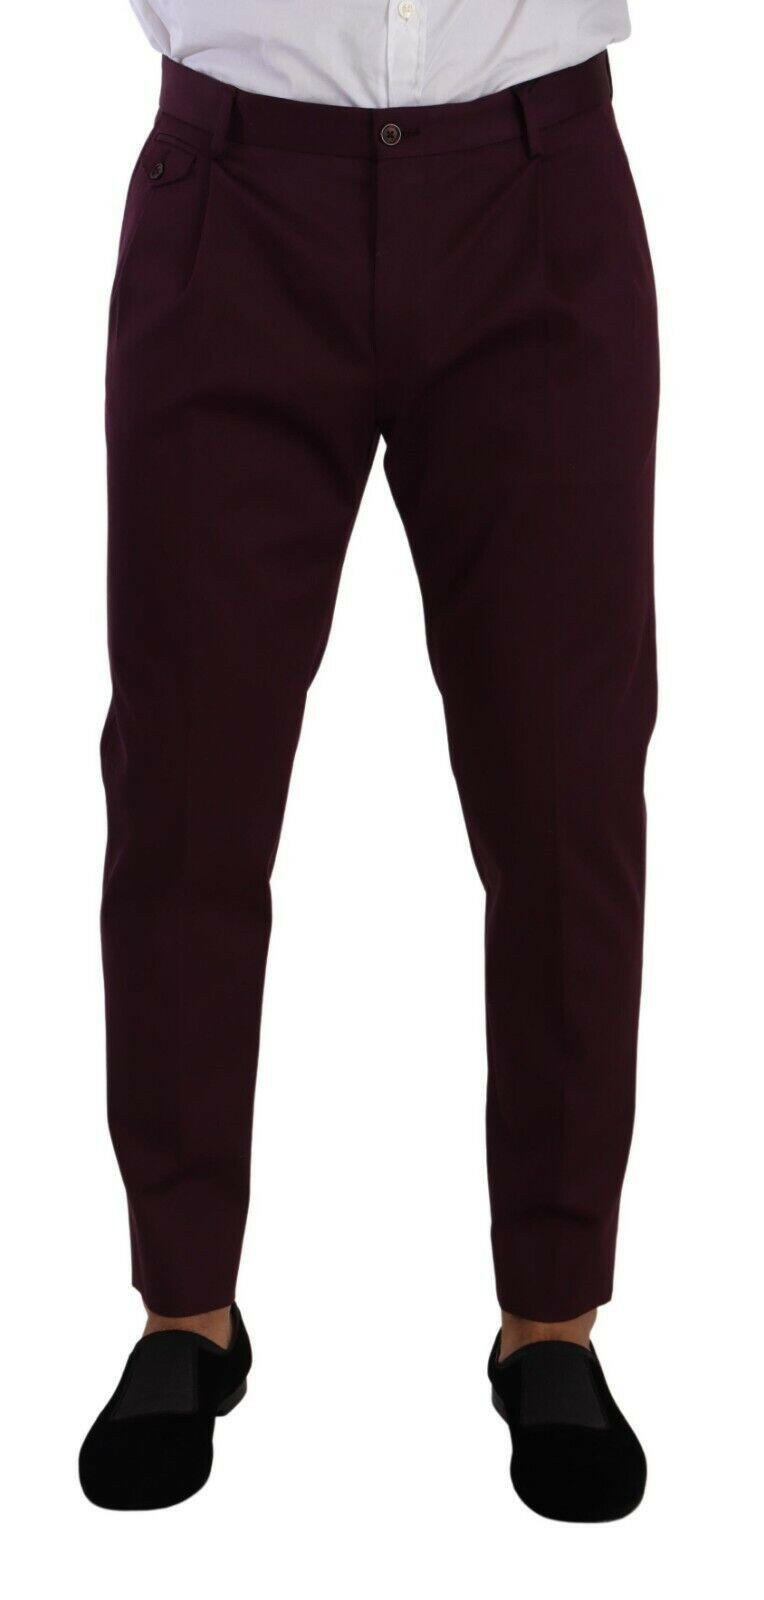 Dolce & Gabbana Purple Cotton Tapered Chinos Dress Pants - GENUINE AUTHENTIC BRAND LLC  